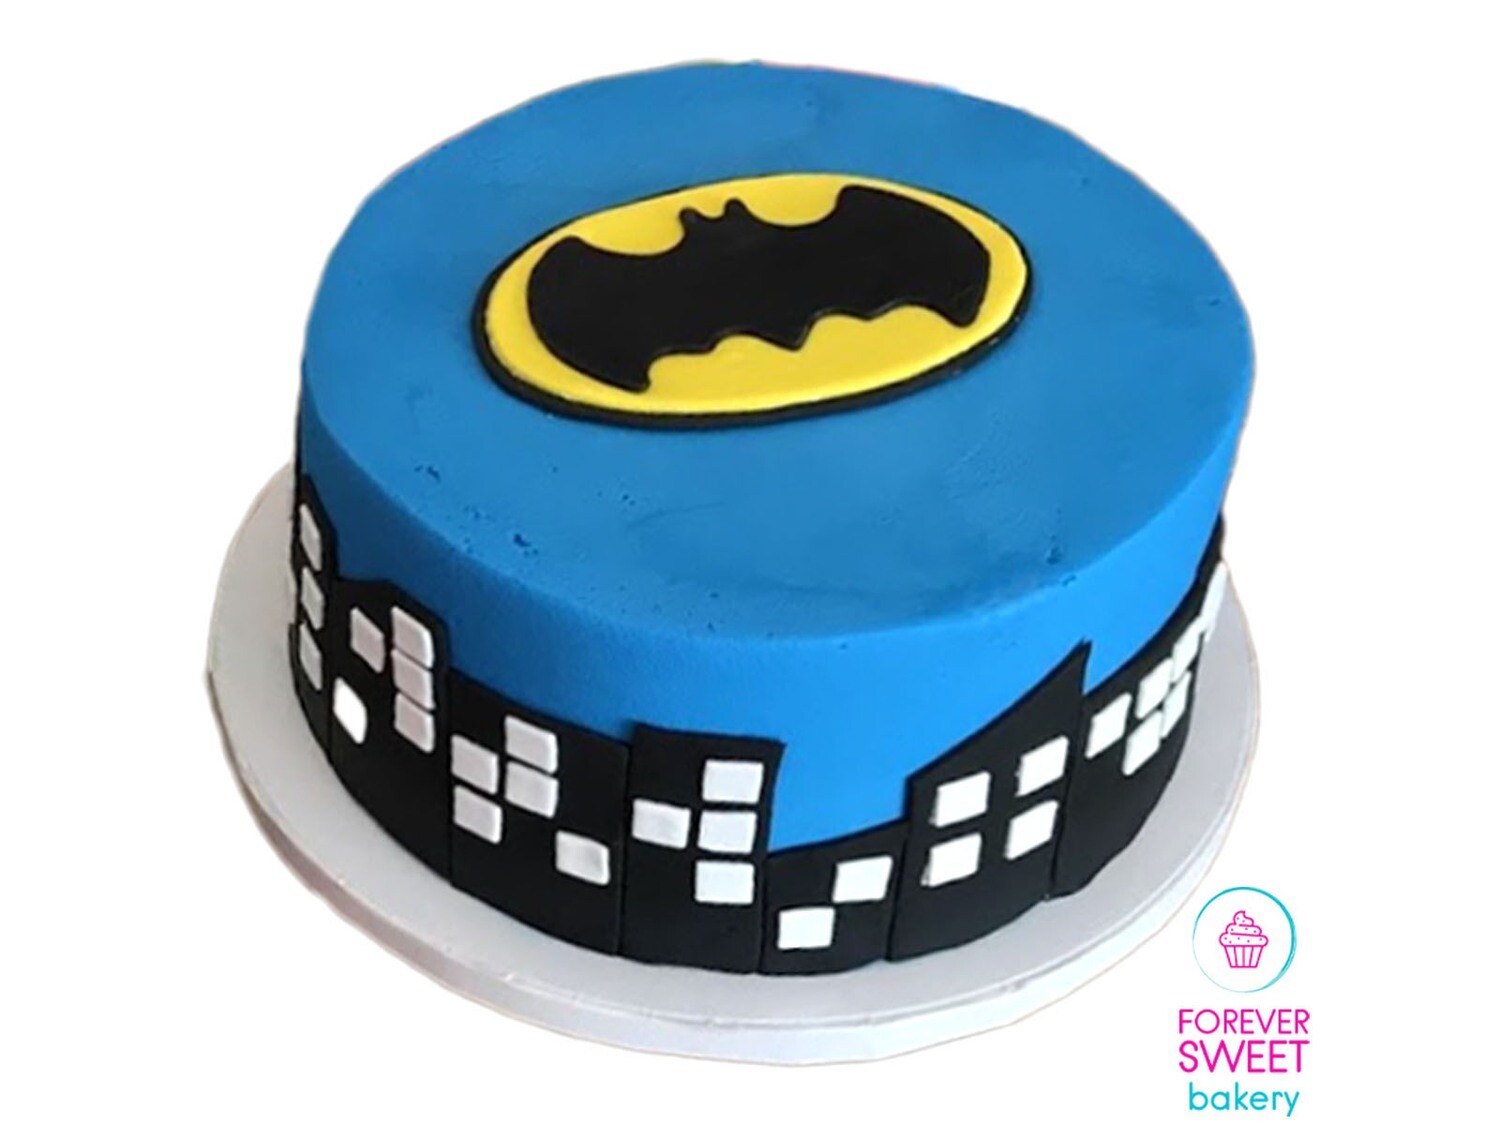 Batman in the City Cake